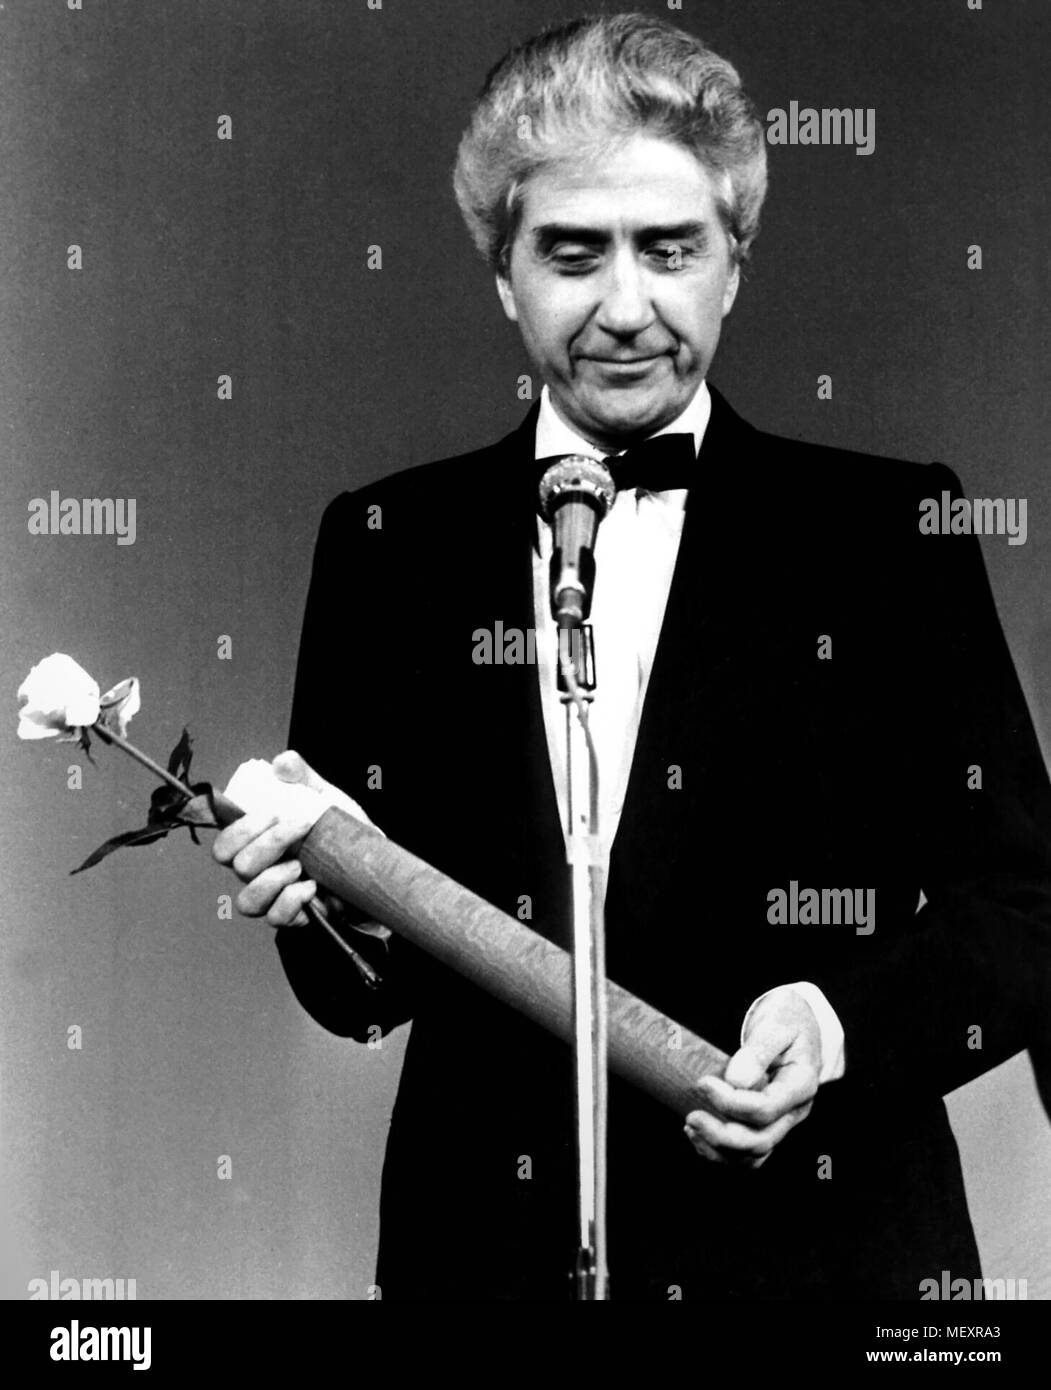 Regisseur Alain Resnais bei einer Preisverleihung für den Film ' Mein Onkel aus Amerika aka. Mon oncle d'Amérique, Frankreich 1980'. Director Alain Resnais at an award ceremony, France 1980 Stock Photo